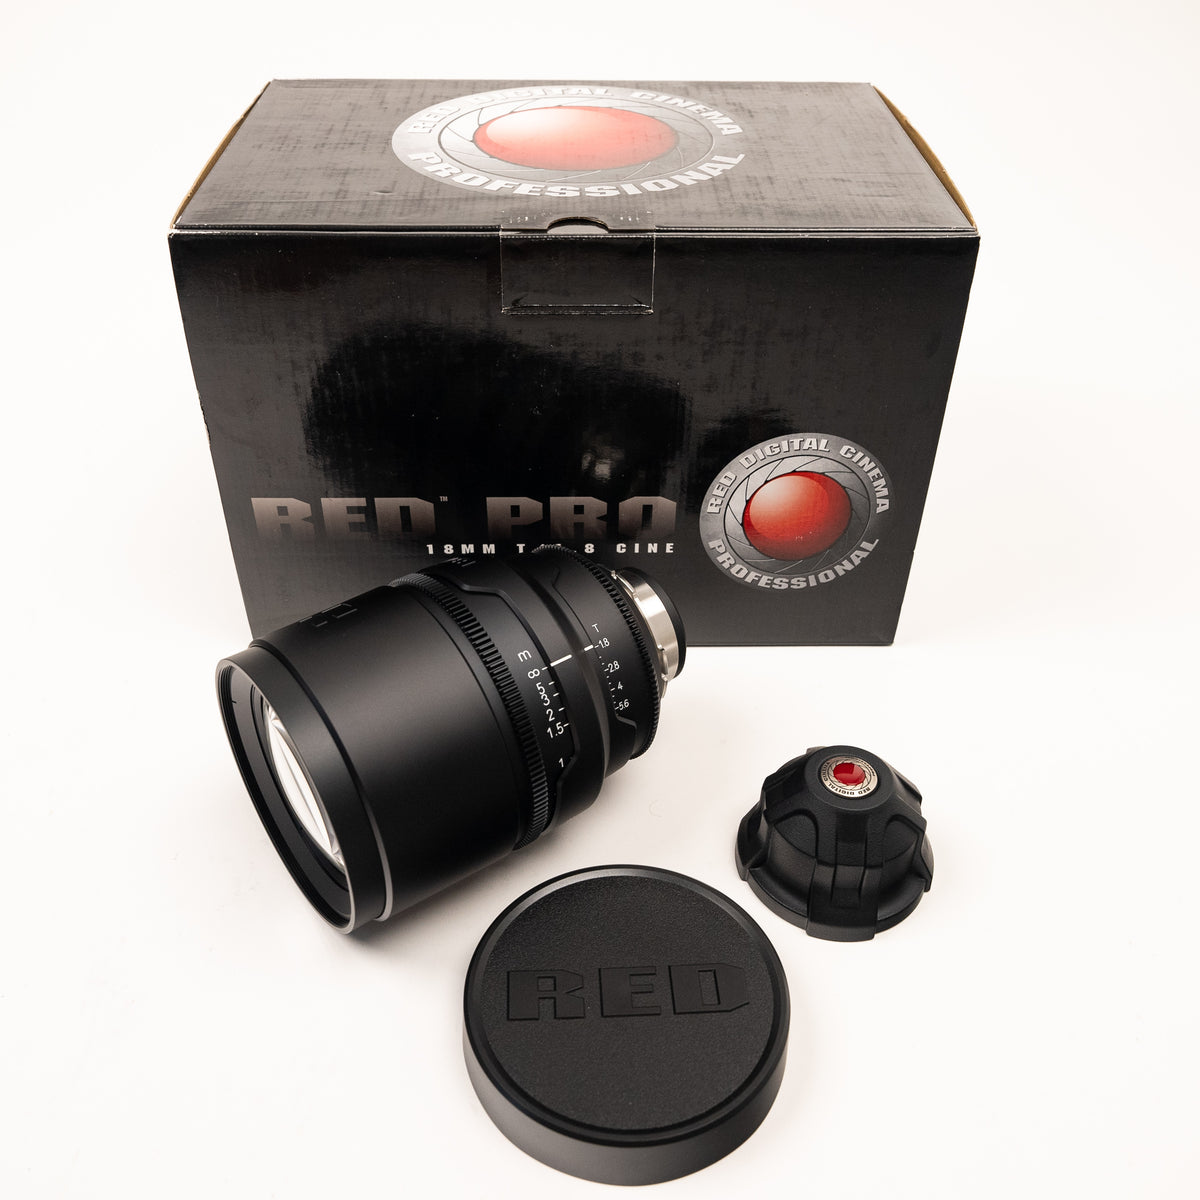 CinemaCameras.com - 6.1.22 - Photo - Selects (375 of 399) - RED Pro 18mm T:1.8 (Metrics).jpg